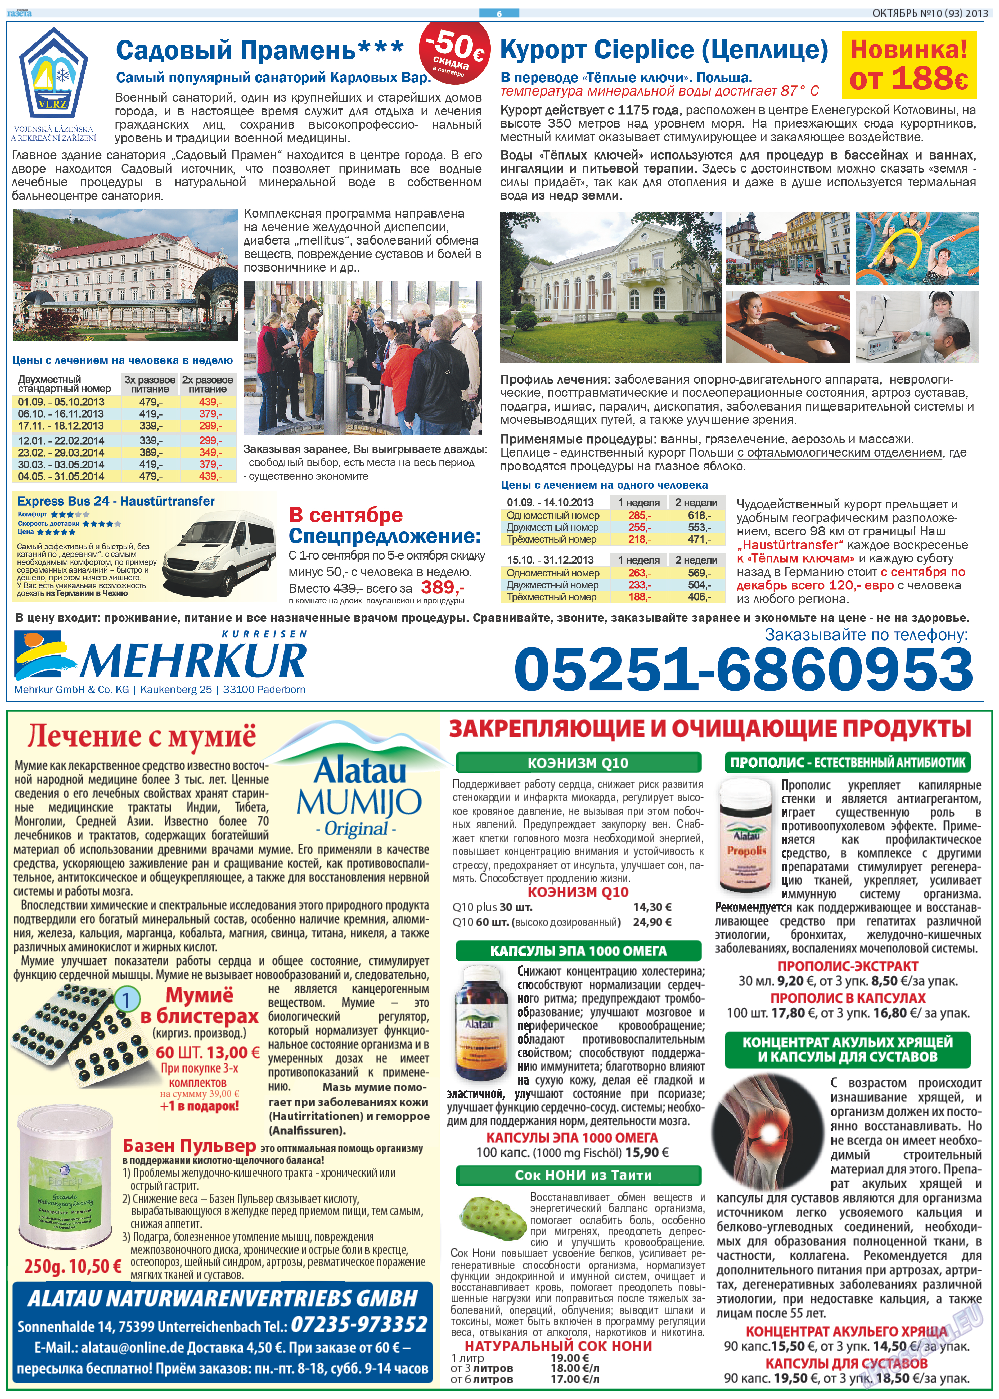 Русская Газета, газета. 2013 №10 стр.6